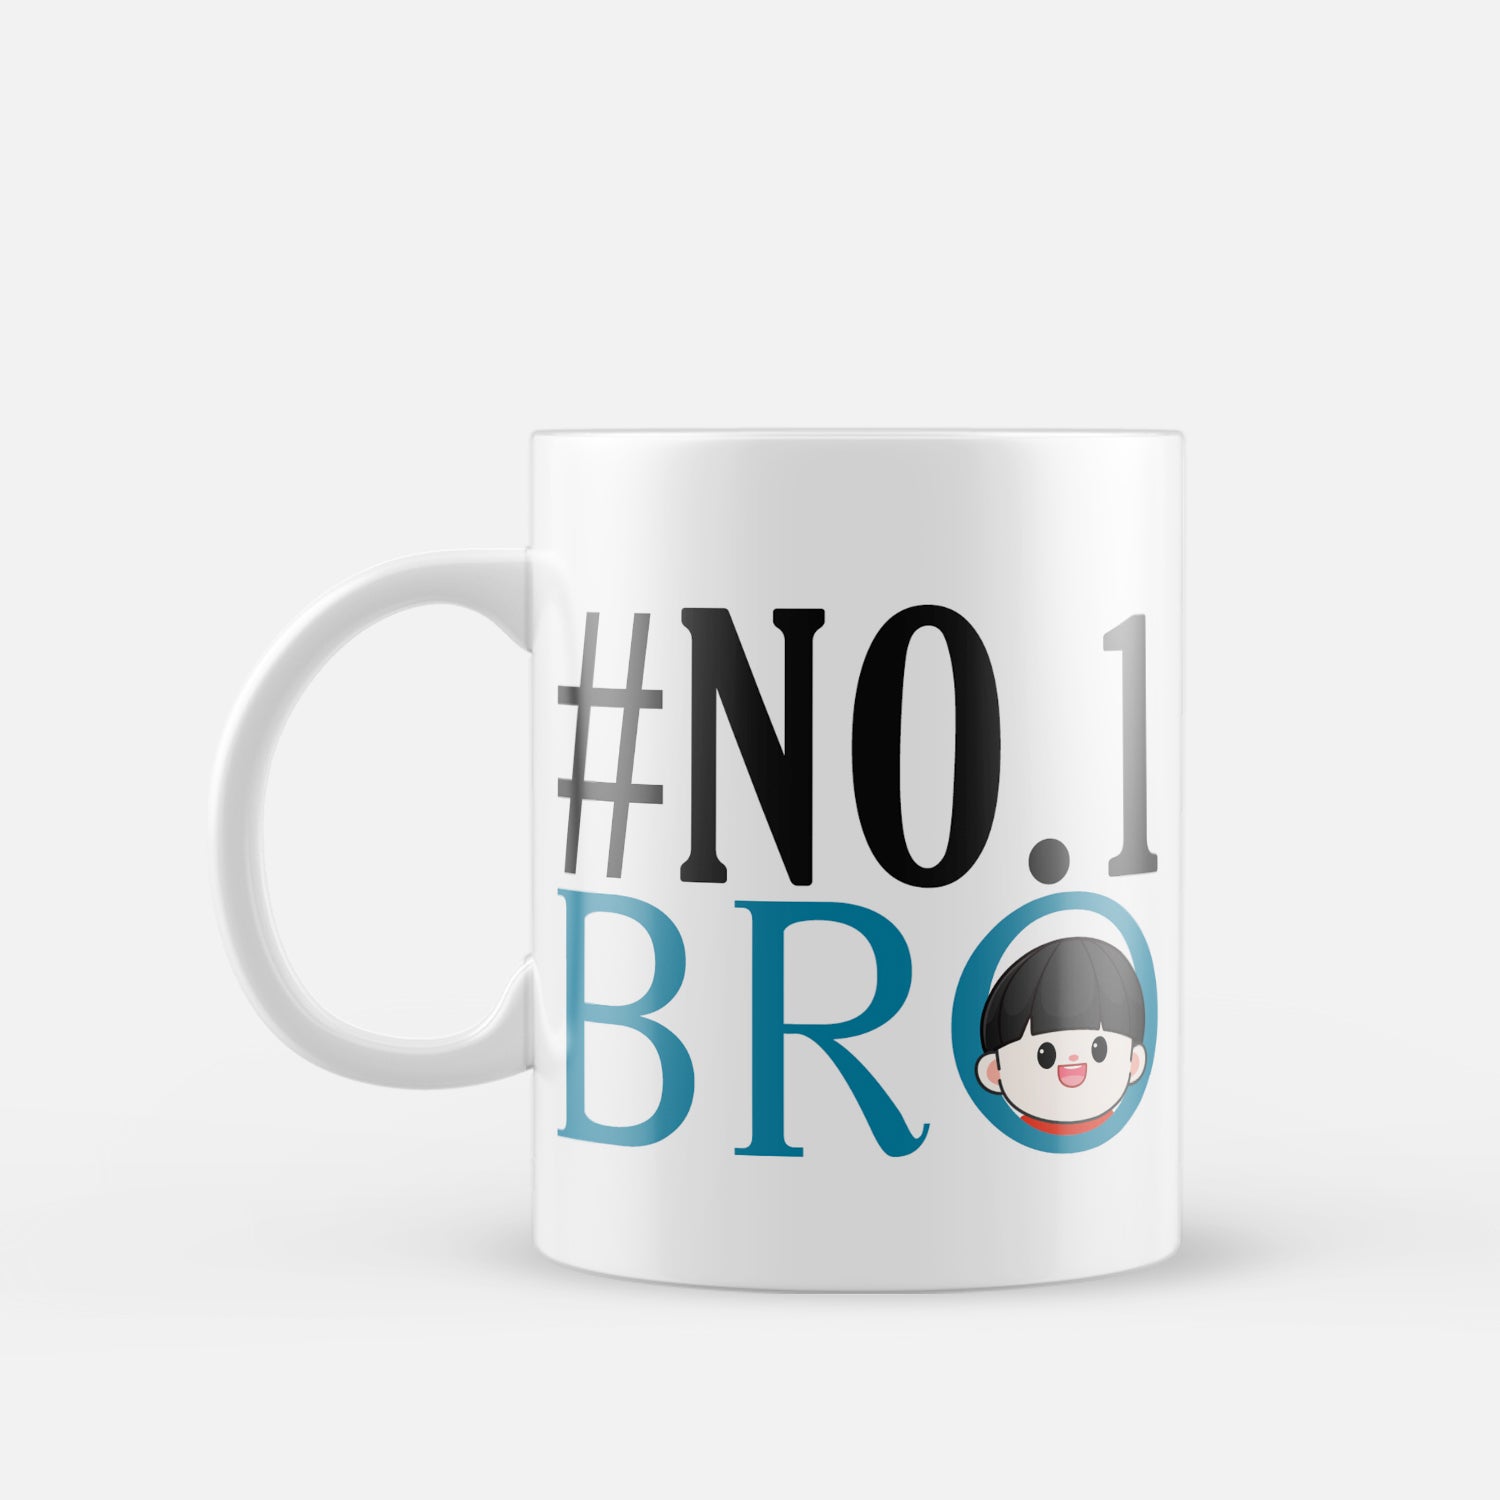 "NO 1 Bro" Brother Ceramic Coffee/Tea Mug 2